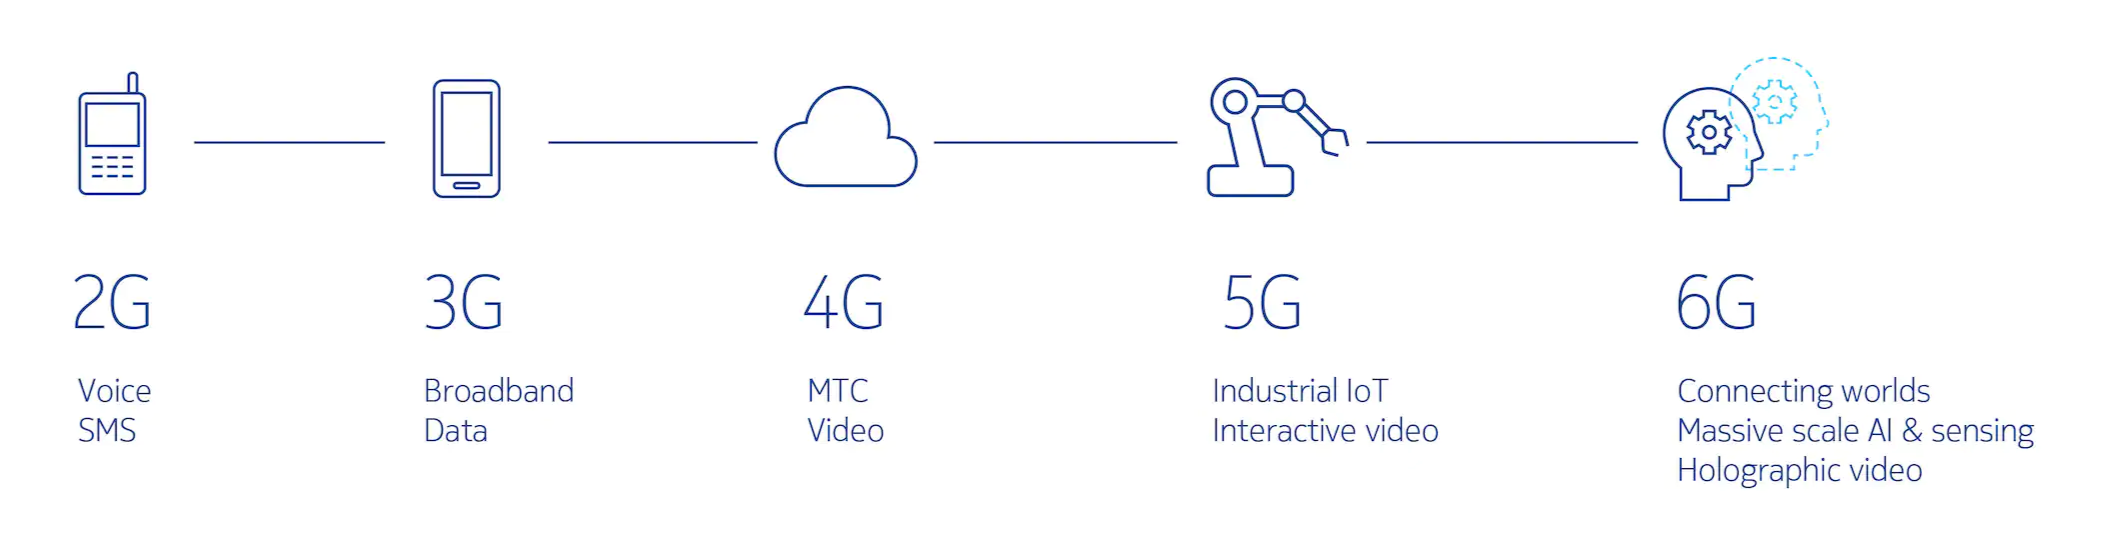 The graphic demonstrates 2G to 6G broadband tech capabilities